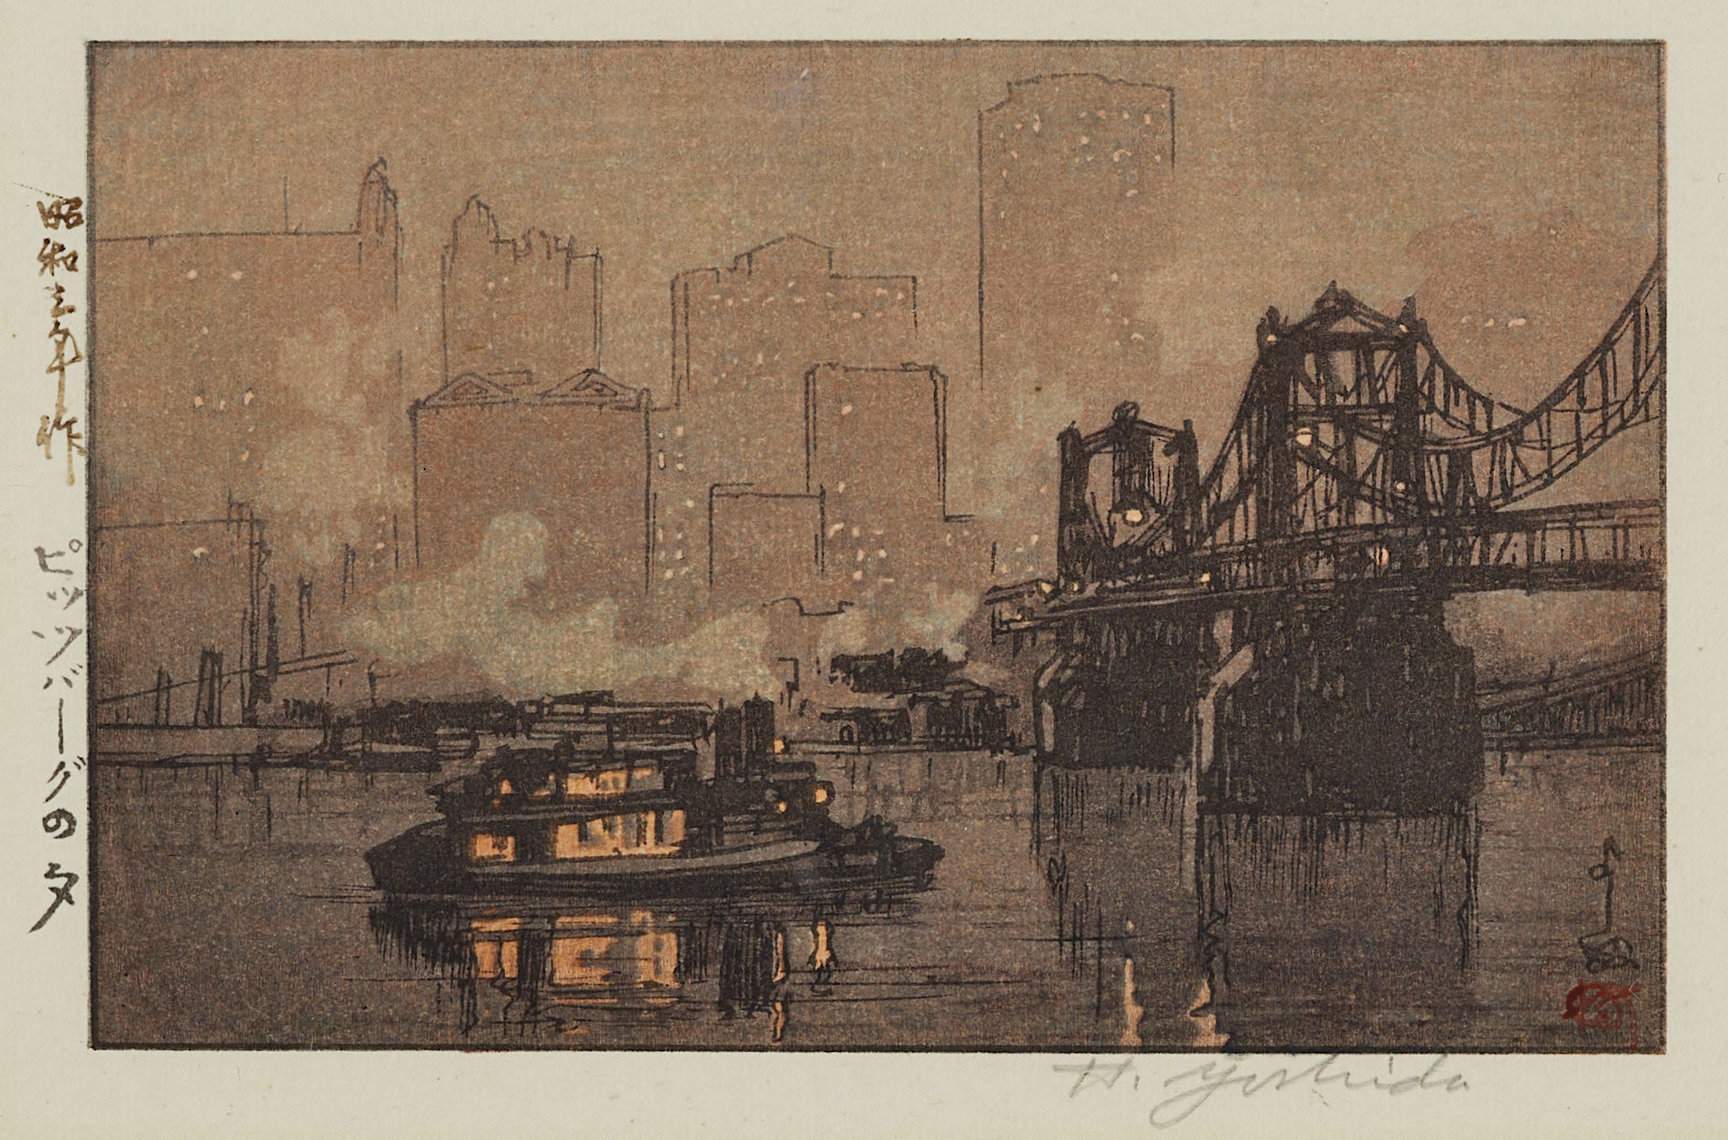 Pittsburgh woodblock print